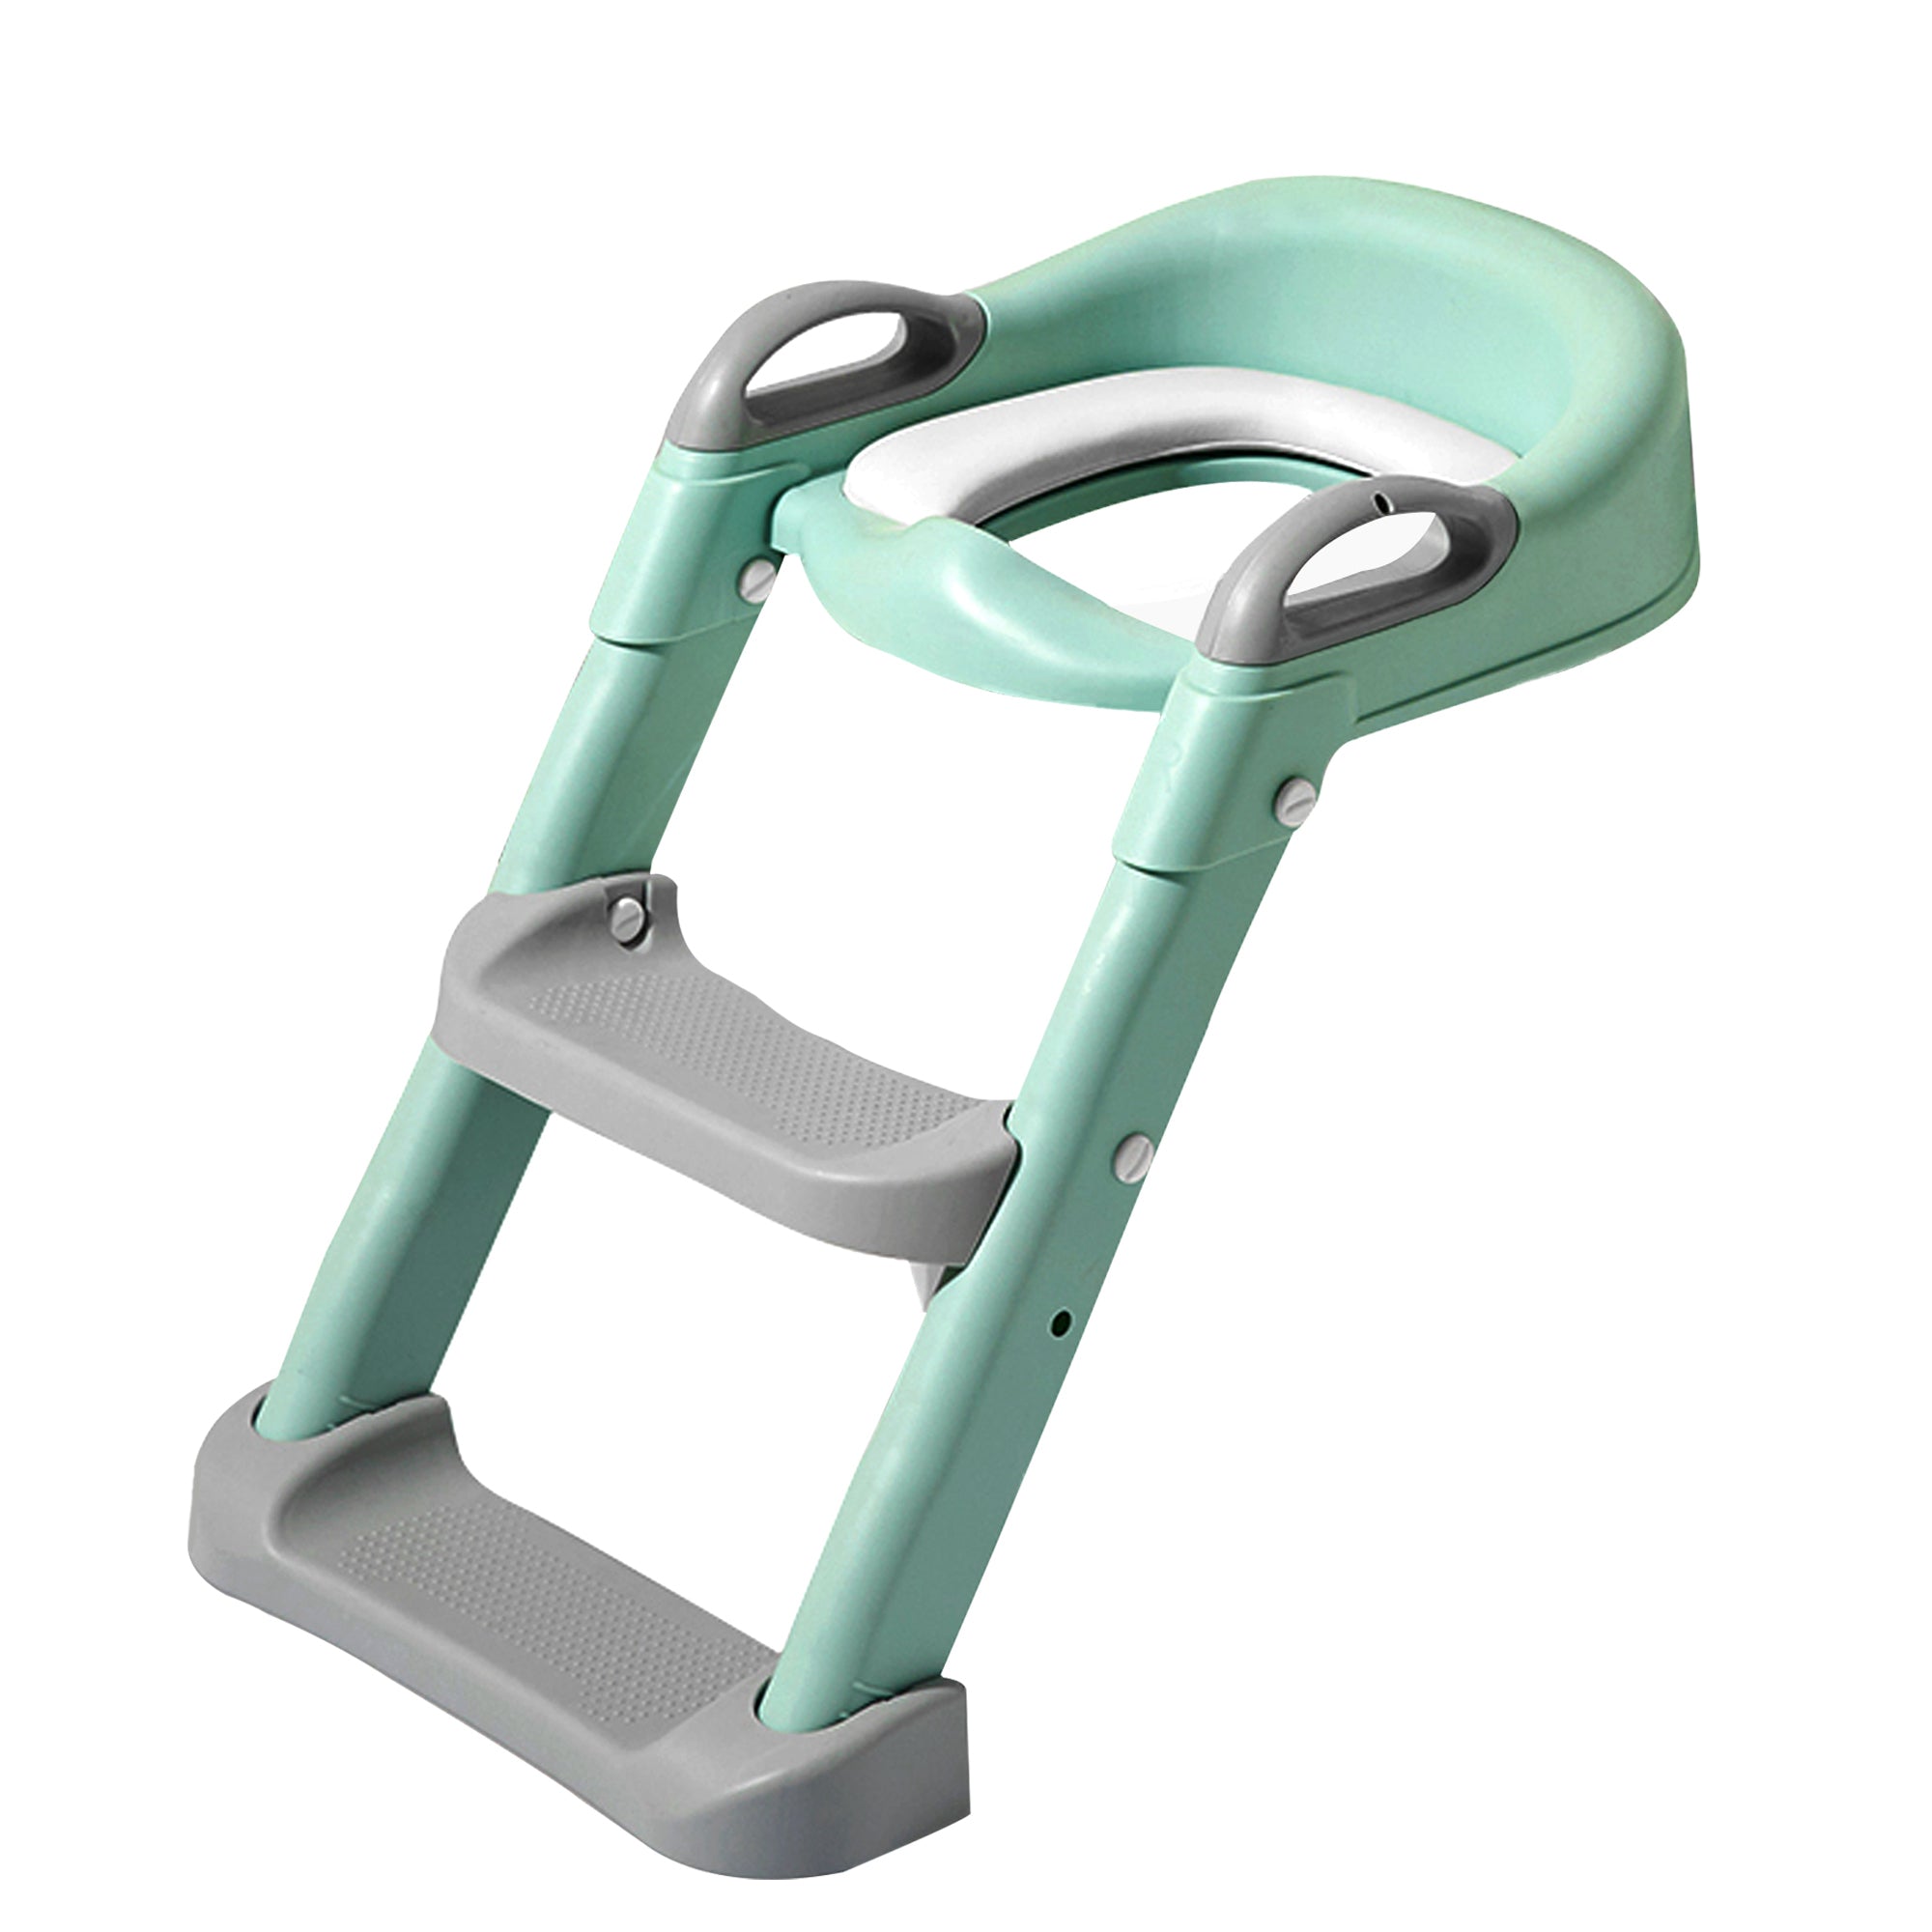 Foldable Potty Training Toilet Seat Ladder Step